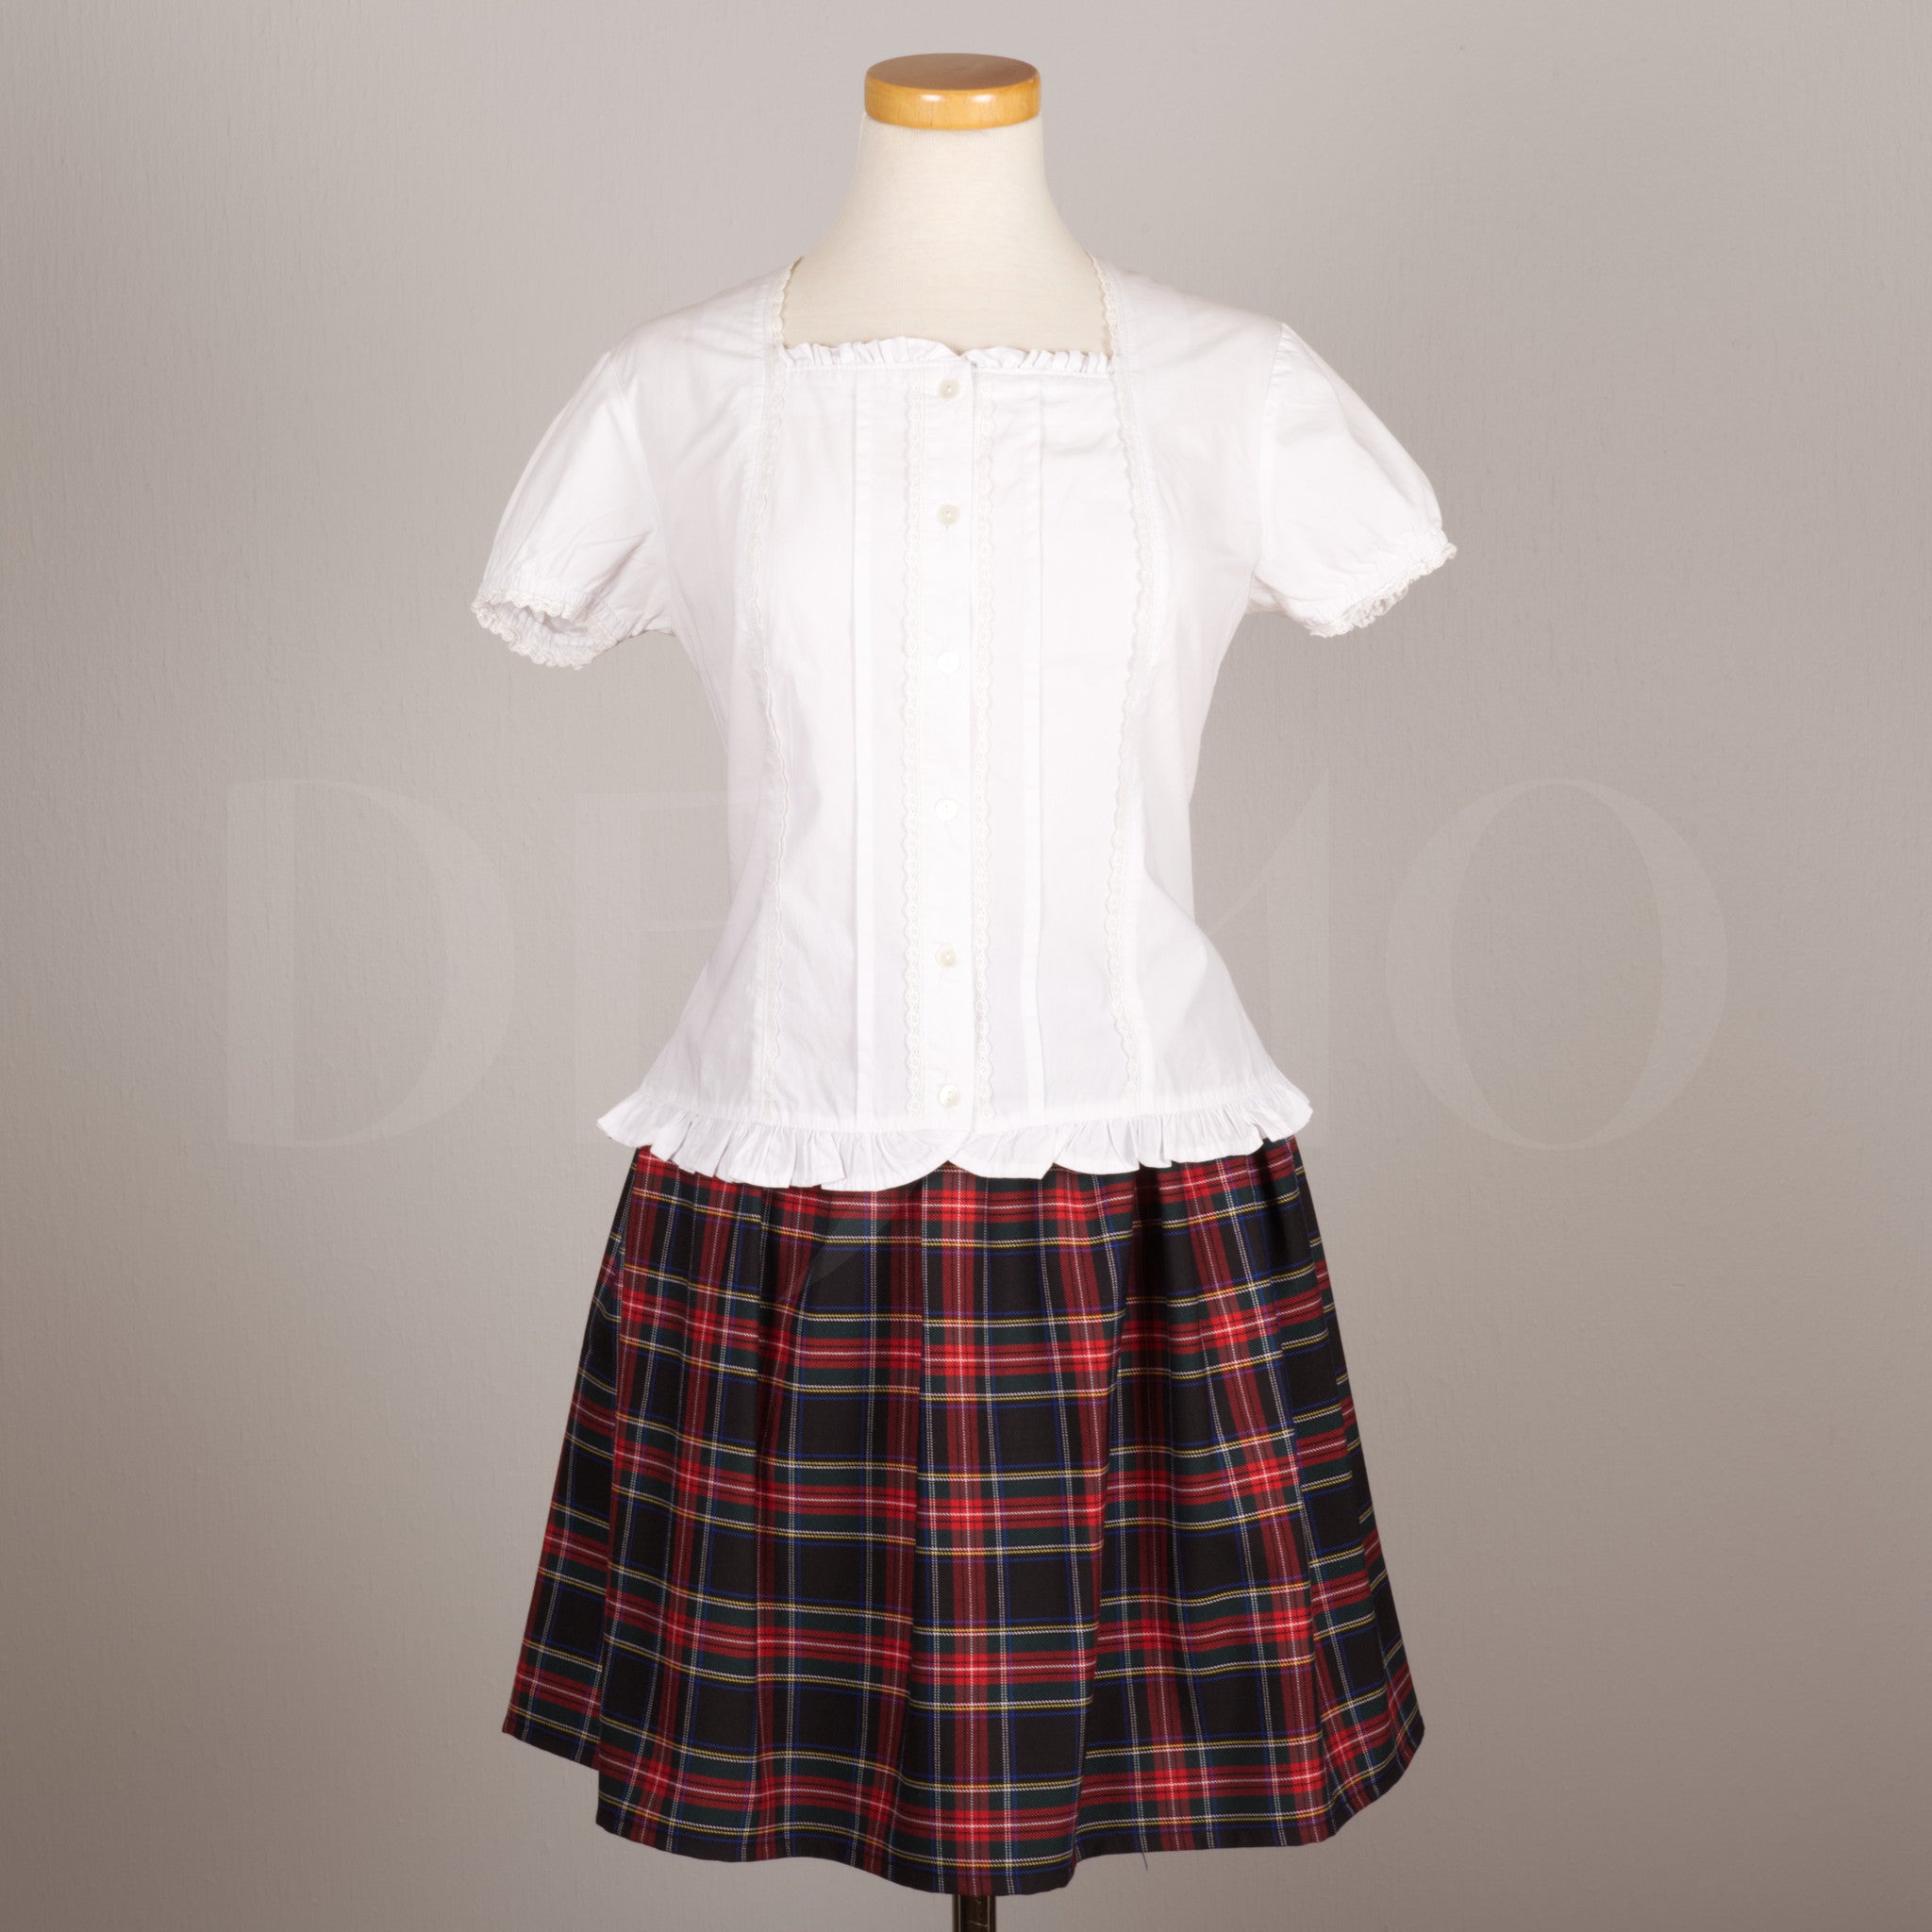 Plaid Skirt with Elastic Waist